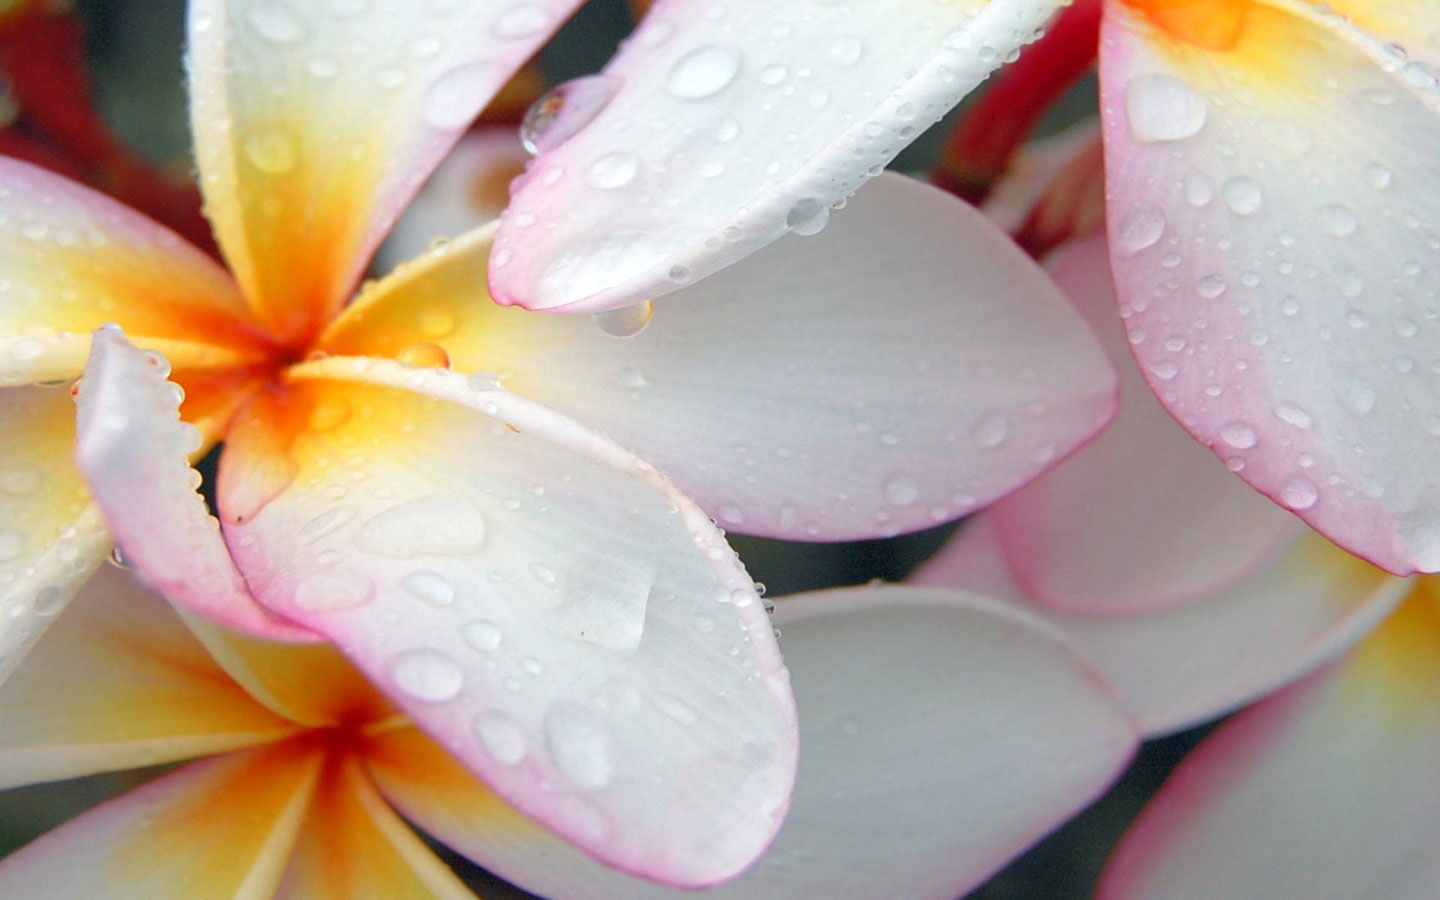 1464743 descargar imagen tierra/naturaleza, frangipani, flor: fondos de pantalla y protectores de pantalla gratis